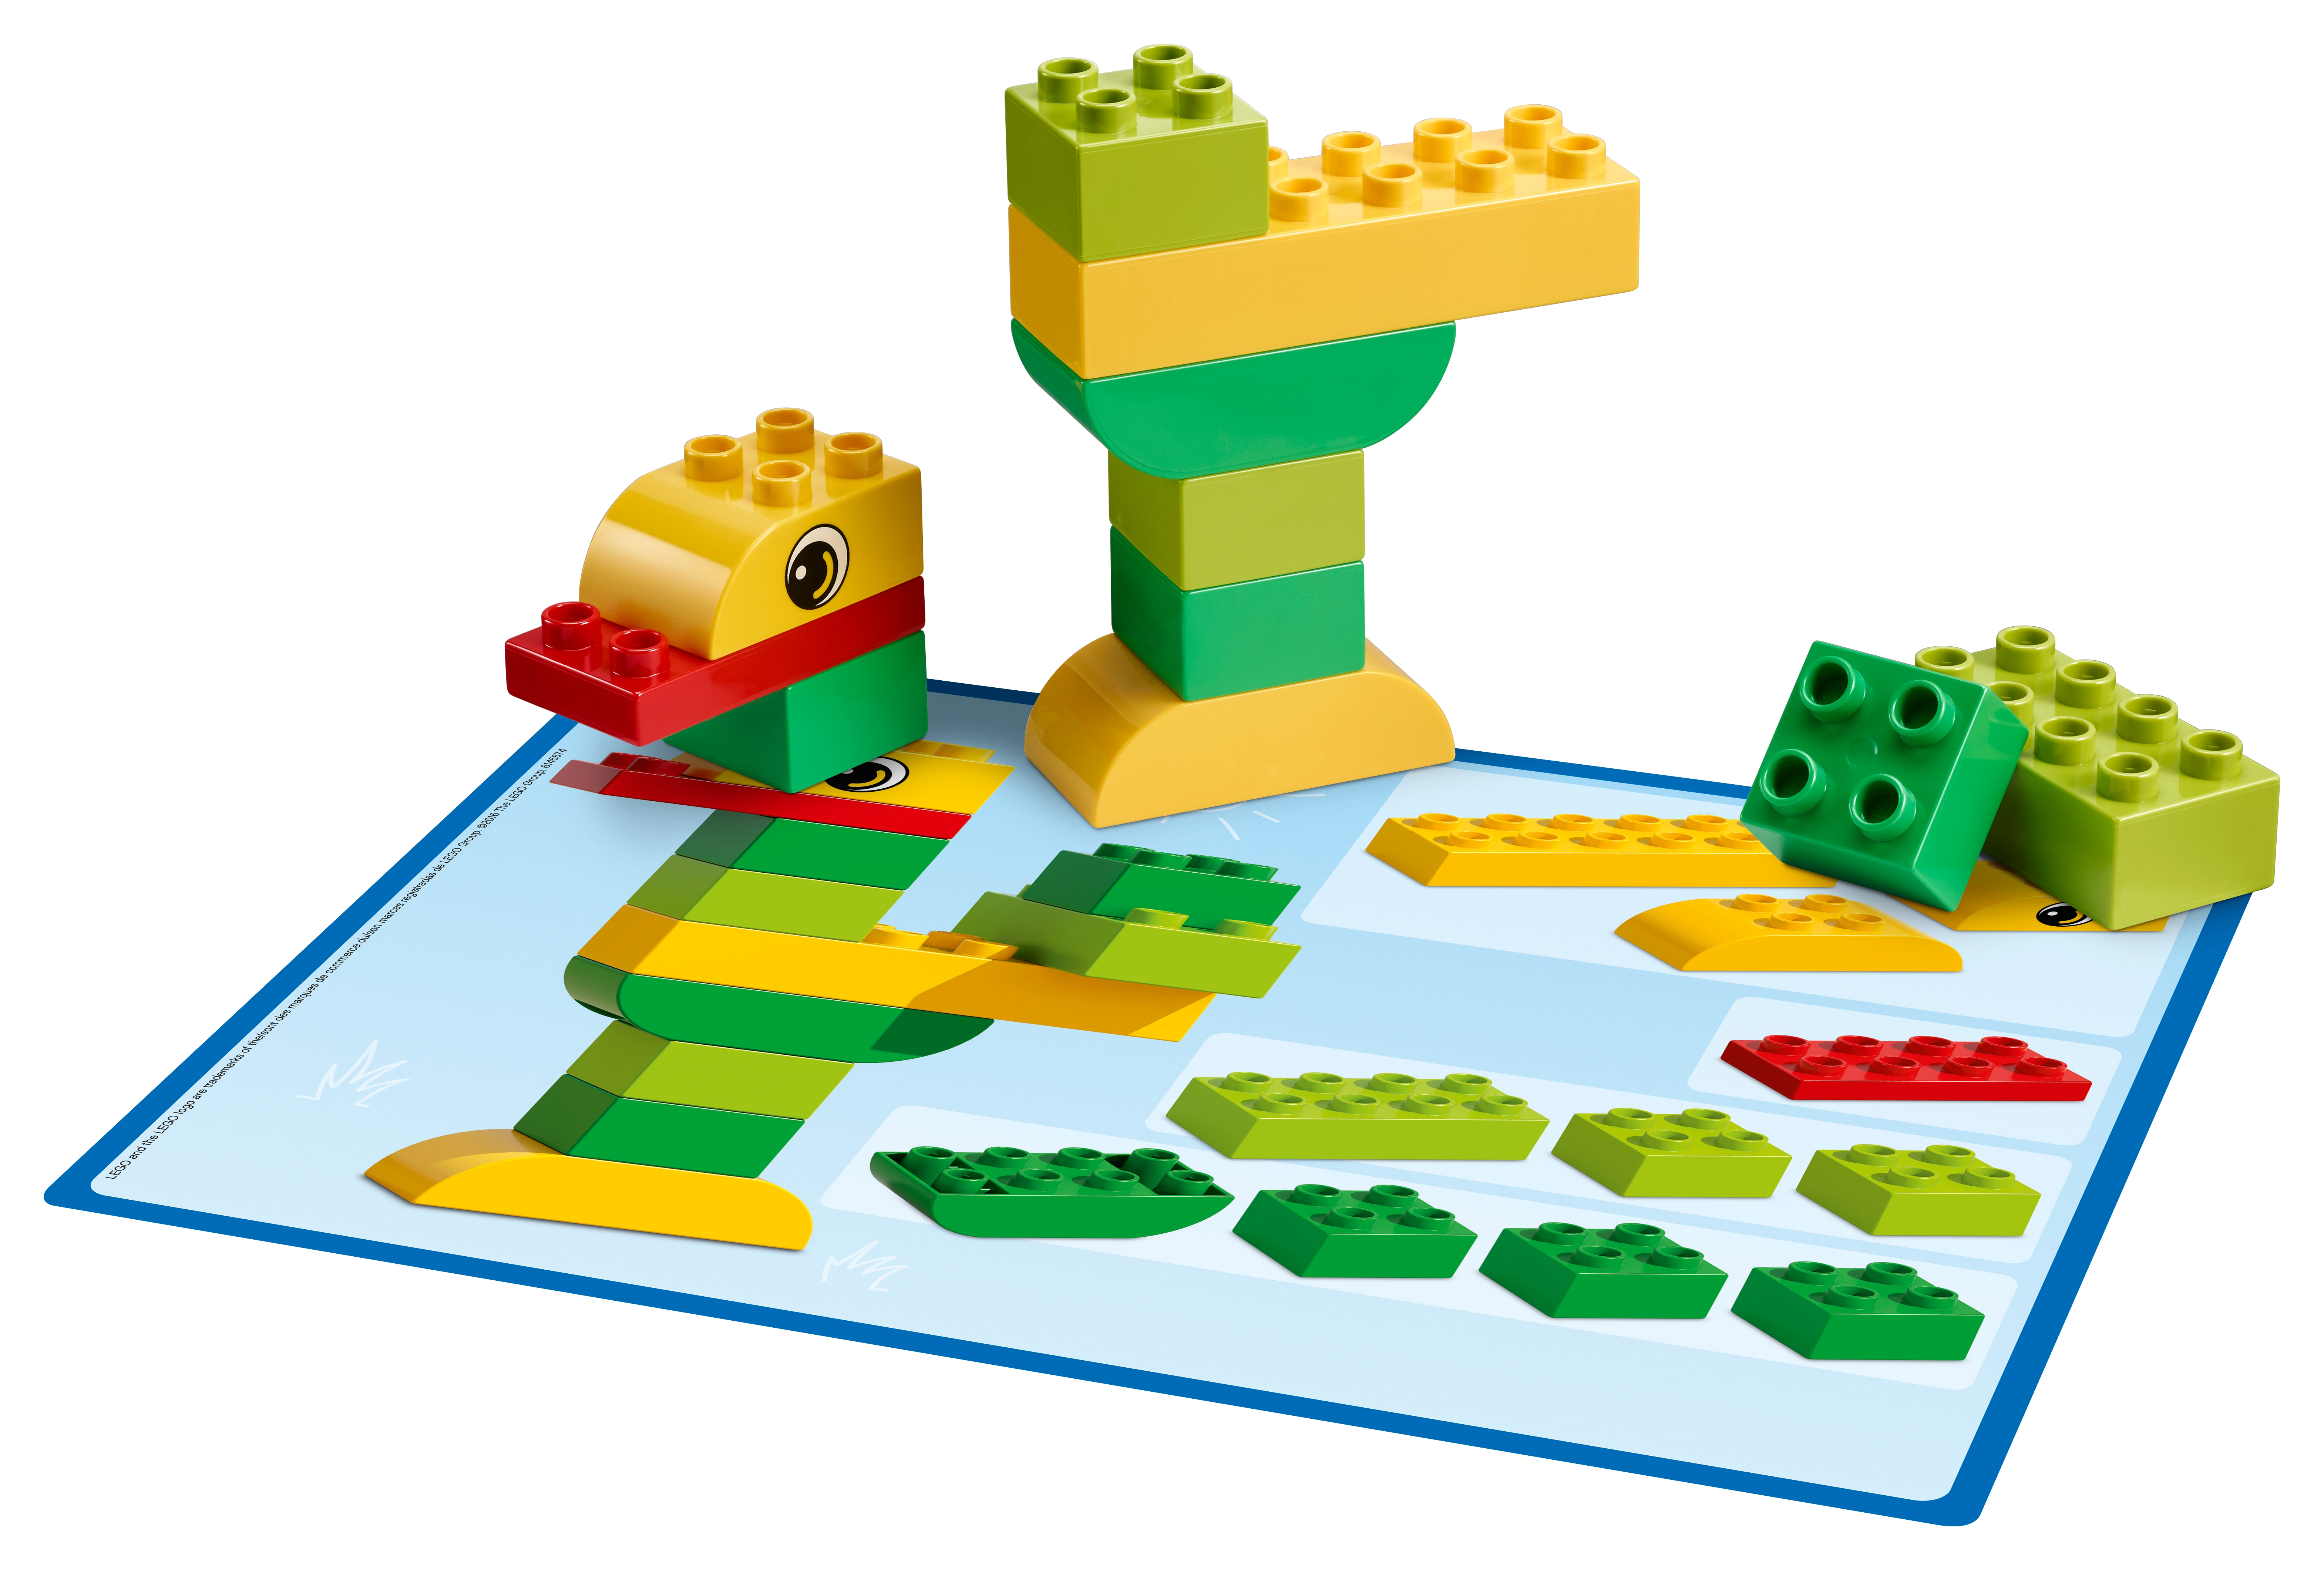 LEGO DUPLO Bricks Set 9027